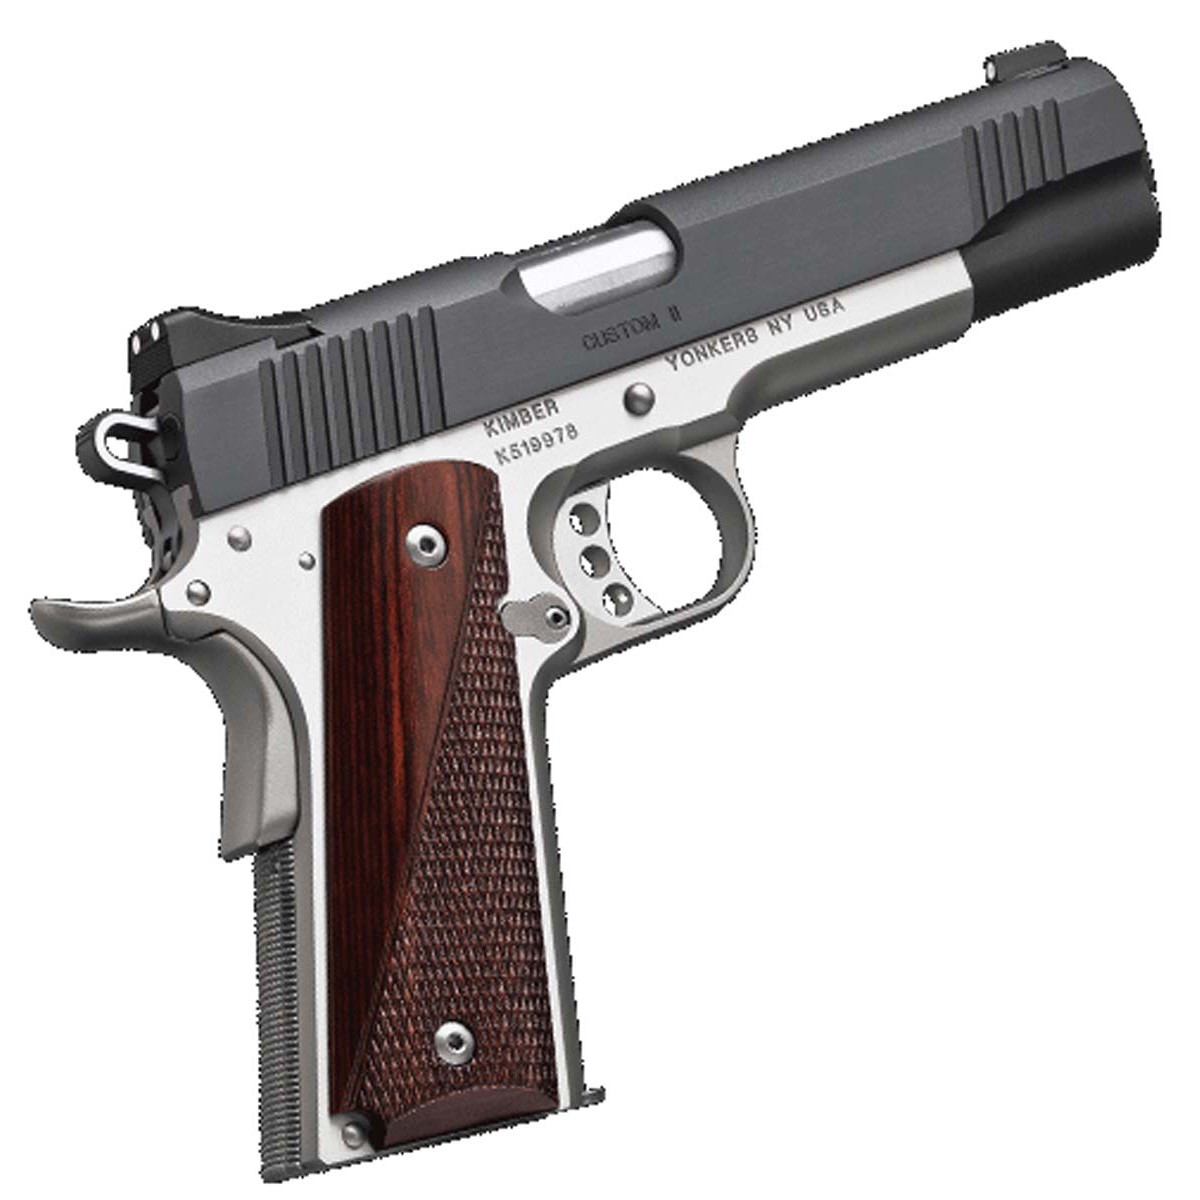 The Kimber Custom II Two-Tone 9mm Handgun